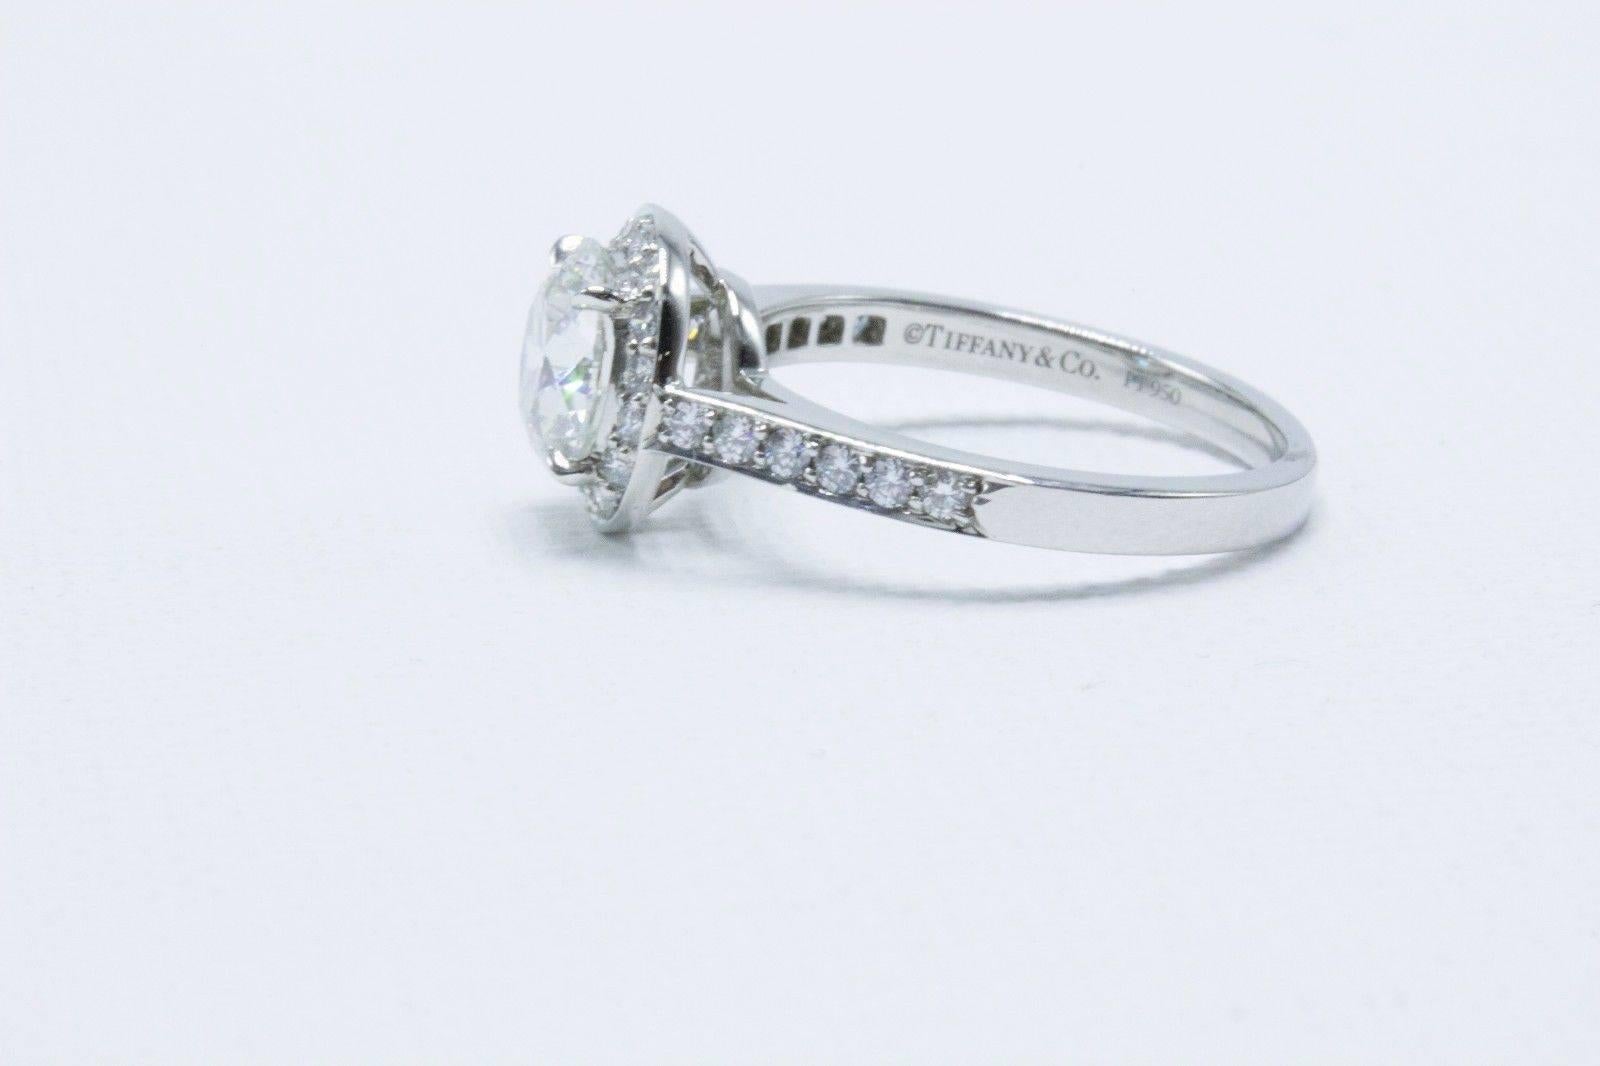 Tiffany & Co. Round Diamond Engagement Ring 1.51 Carat G VS2 in Platinum 1